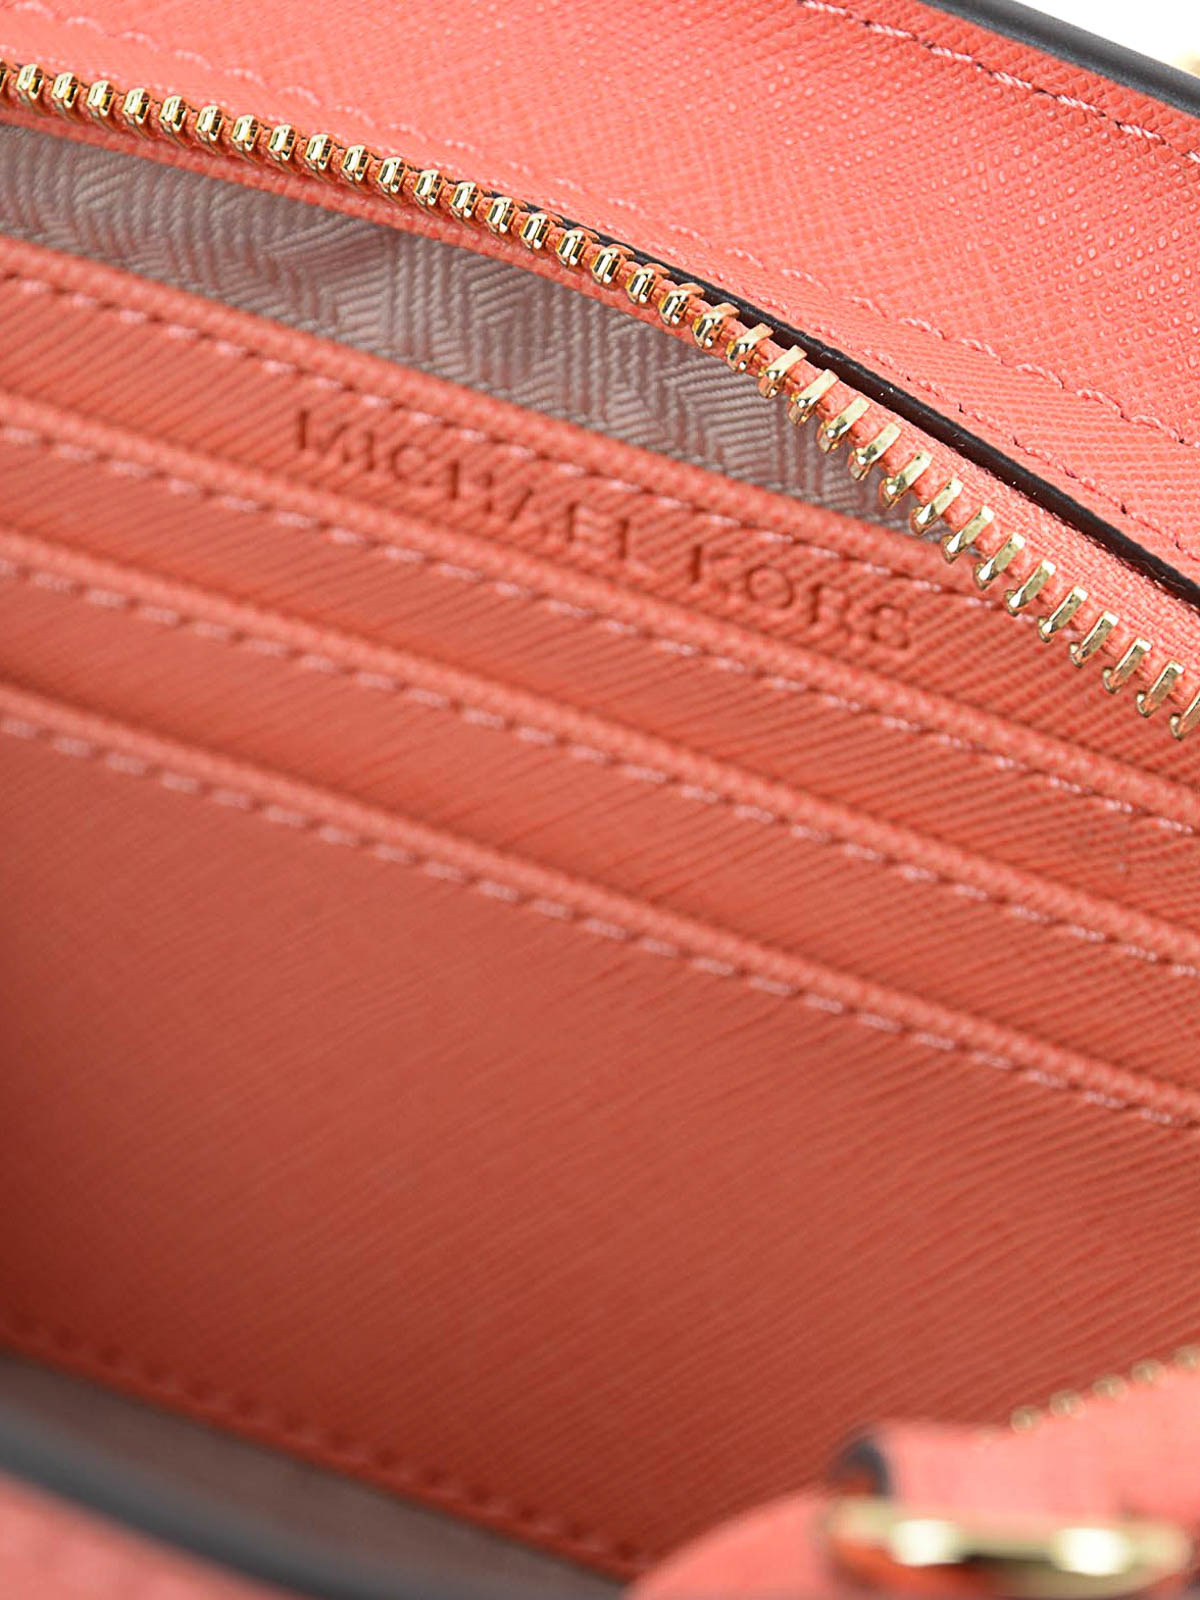 Buy the Michael Kors Saffiano Leather Small Selma Crossbody Bag Orange Red